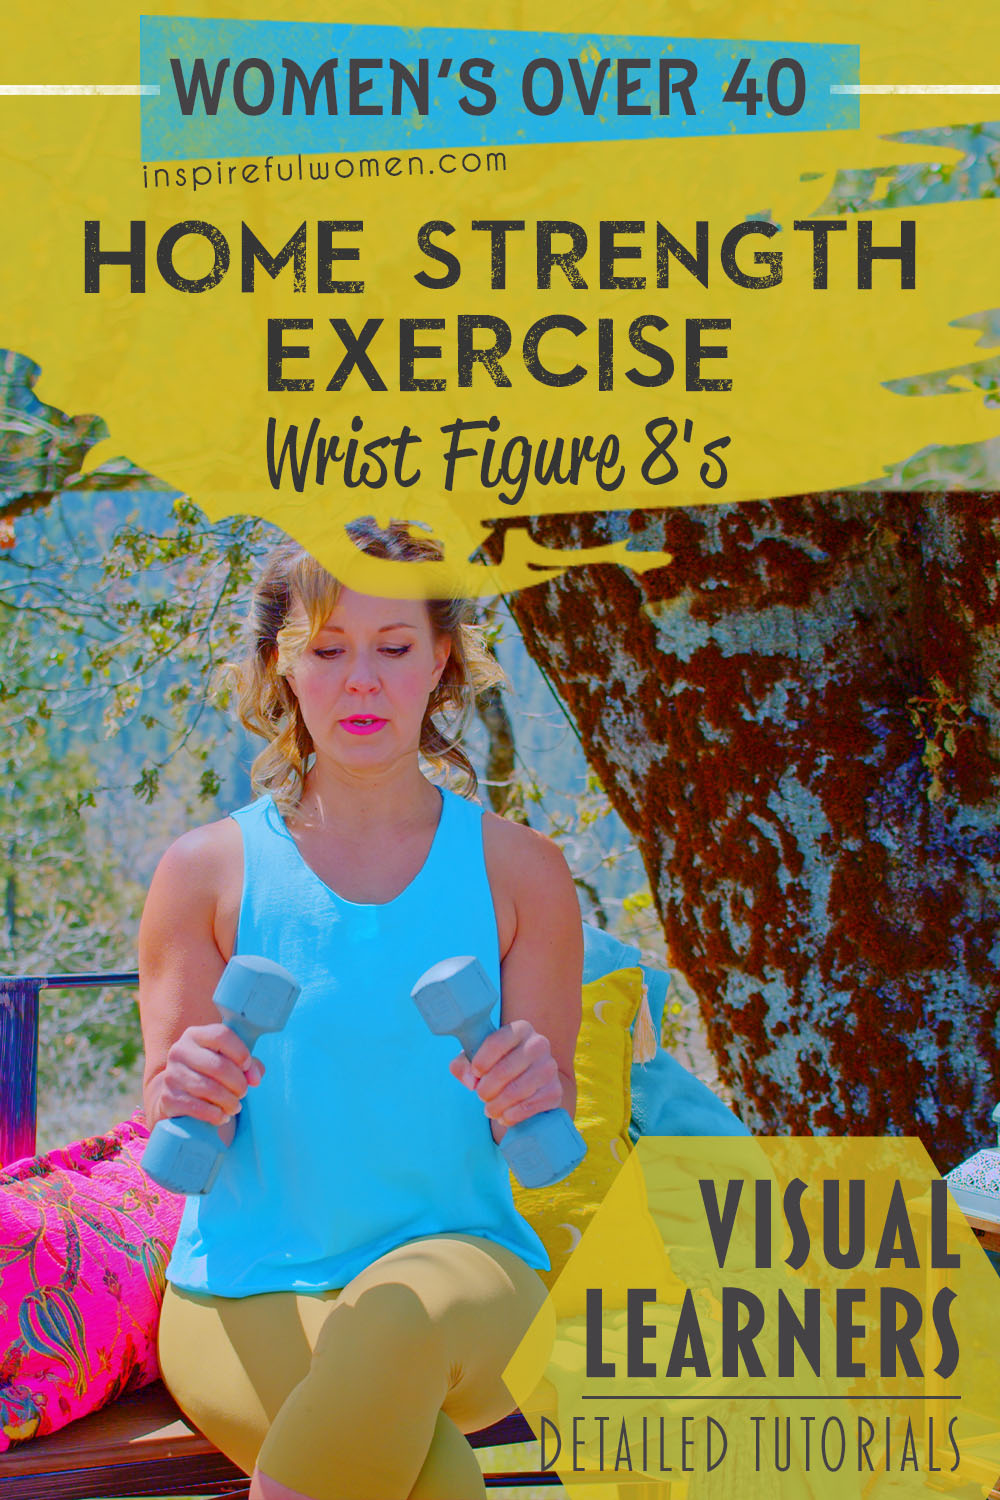 wrist-figure-8-dumbbell-lower-arm-exercise-proper-form-women-40-plus